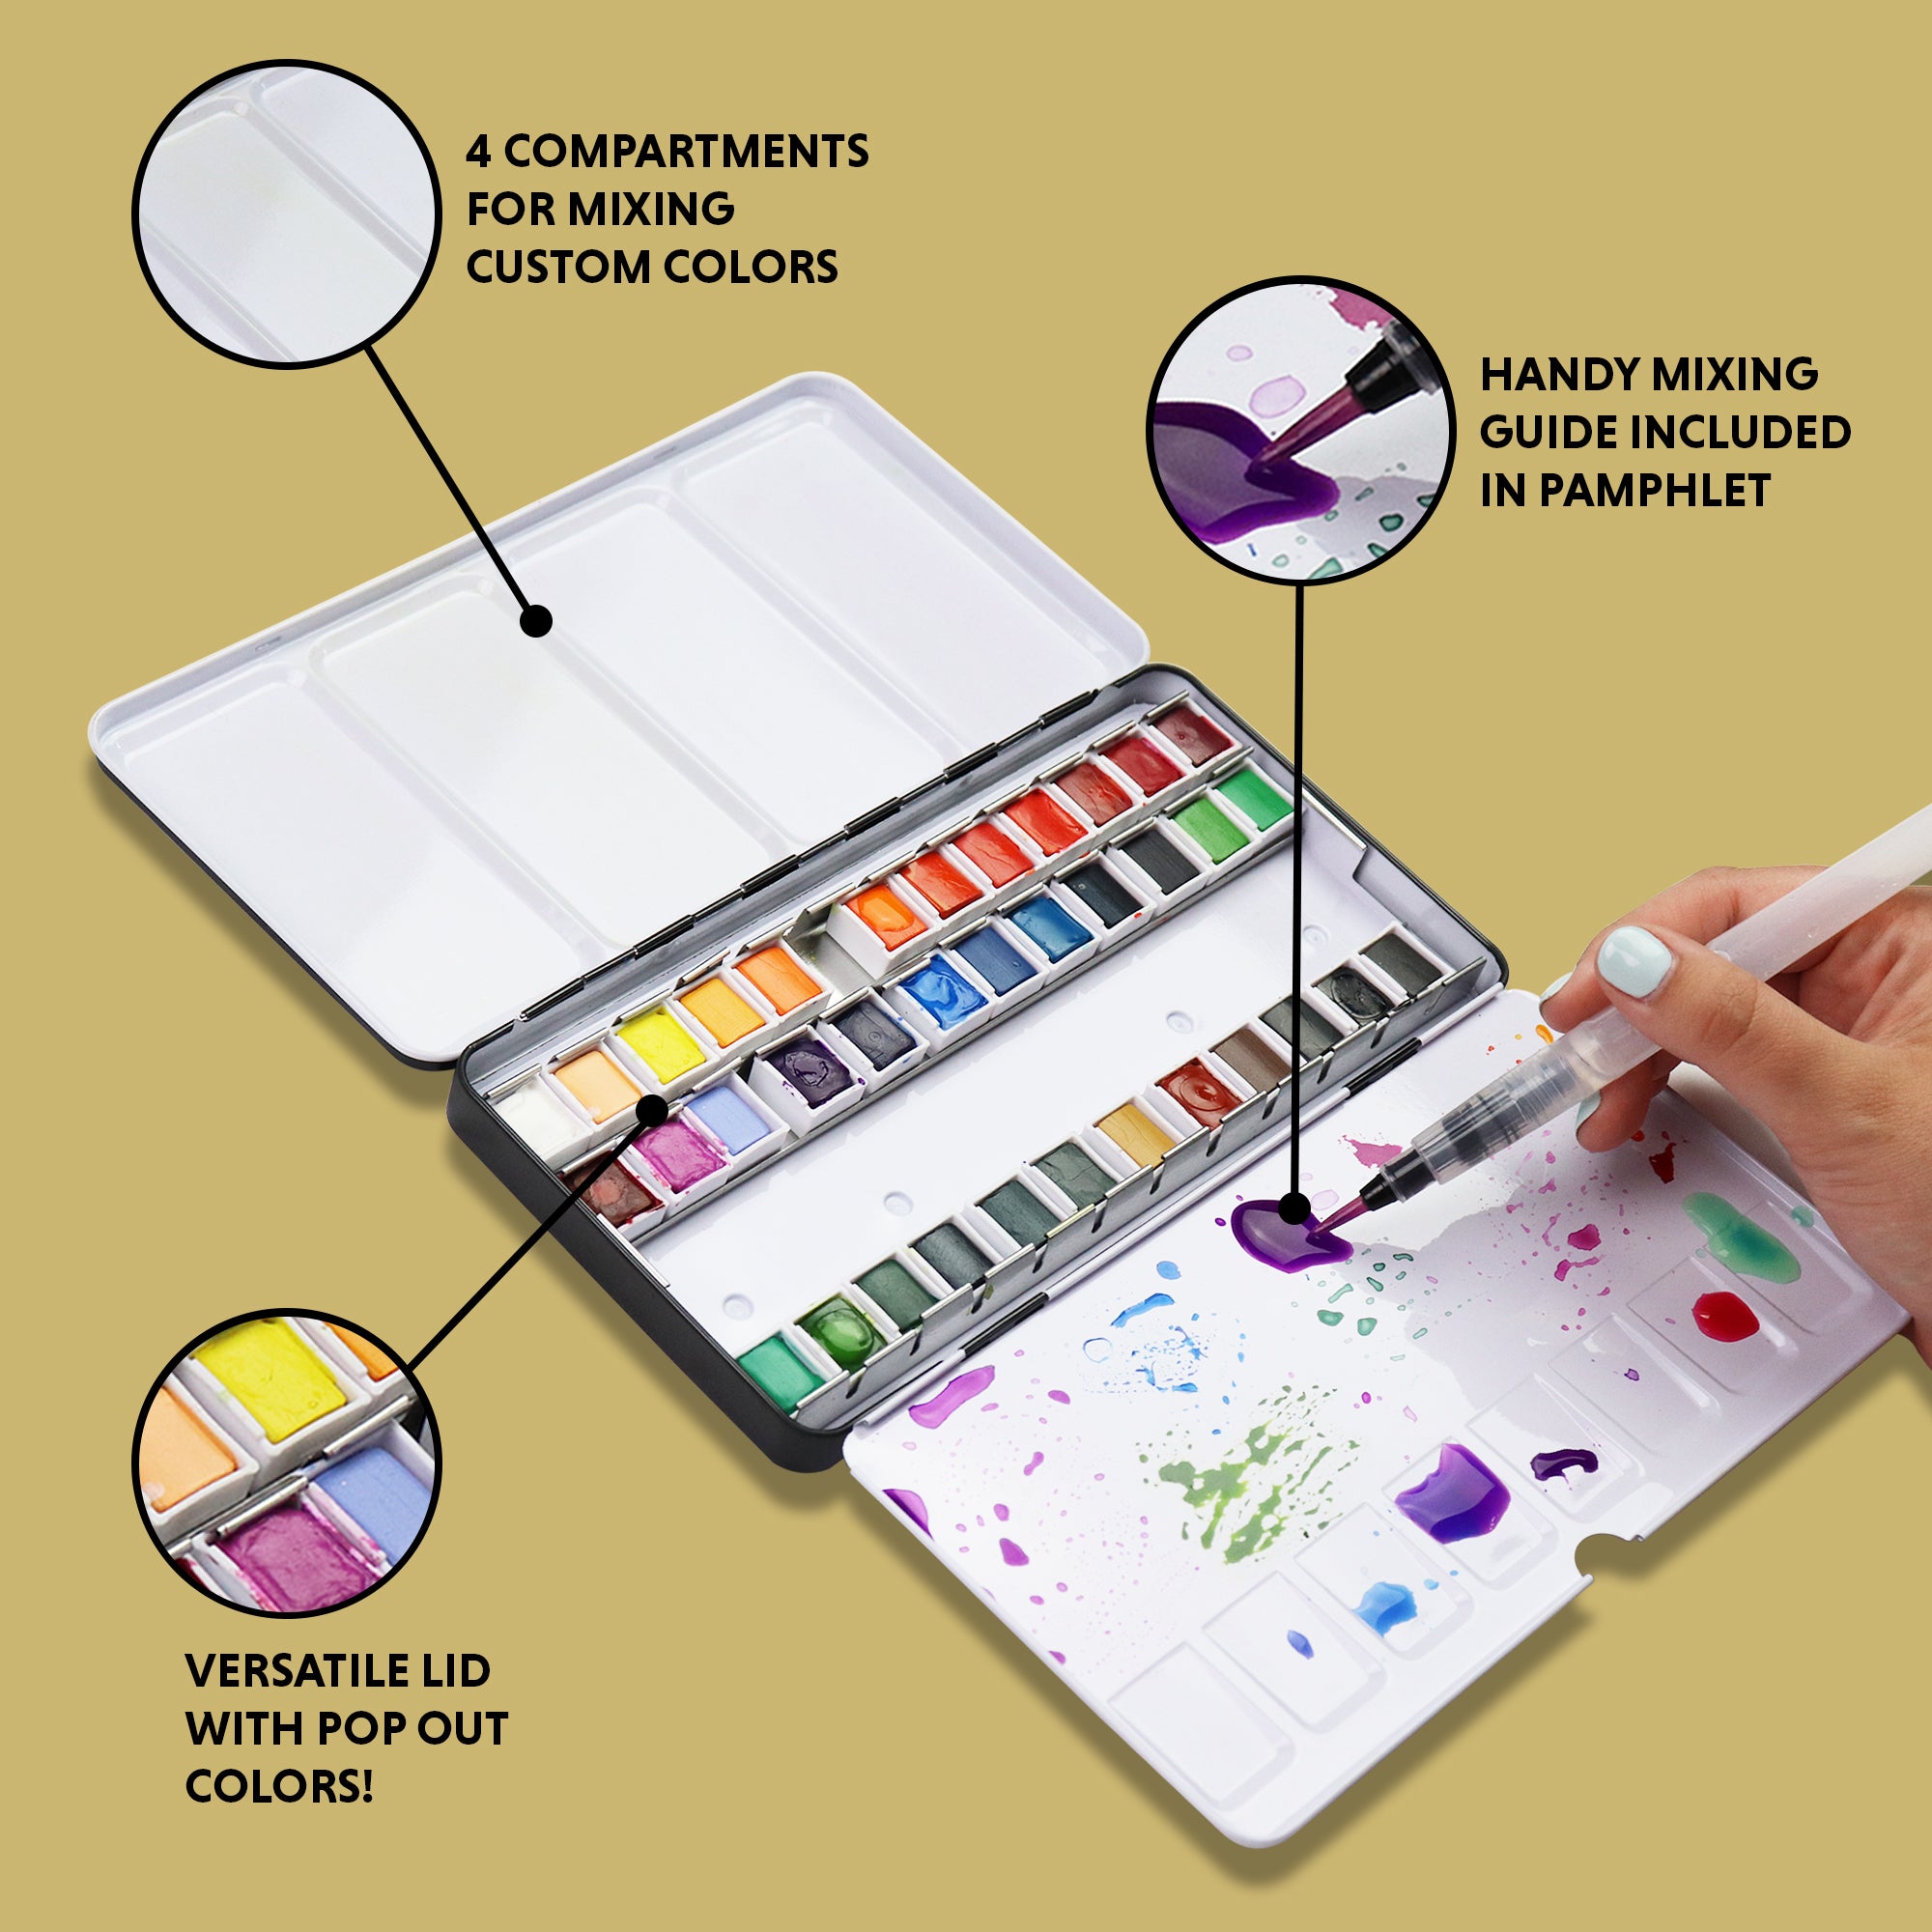 Pagos Watercolor Paint Set – Art Kit of 36 Vivid Colors W 10 Sheets Water Color Paper – Refillable Brush Sponge Drawing Pencil, Brush, Gift Set for